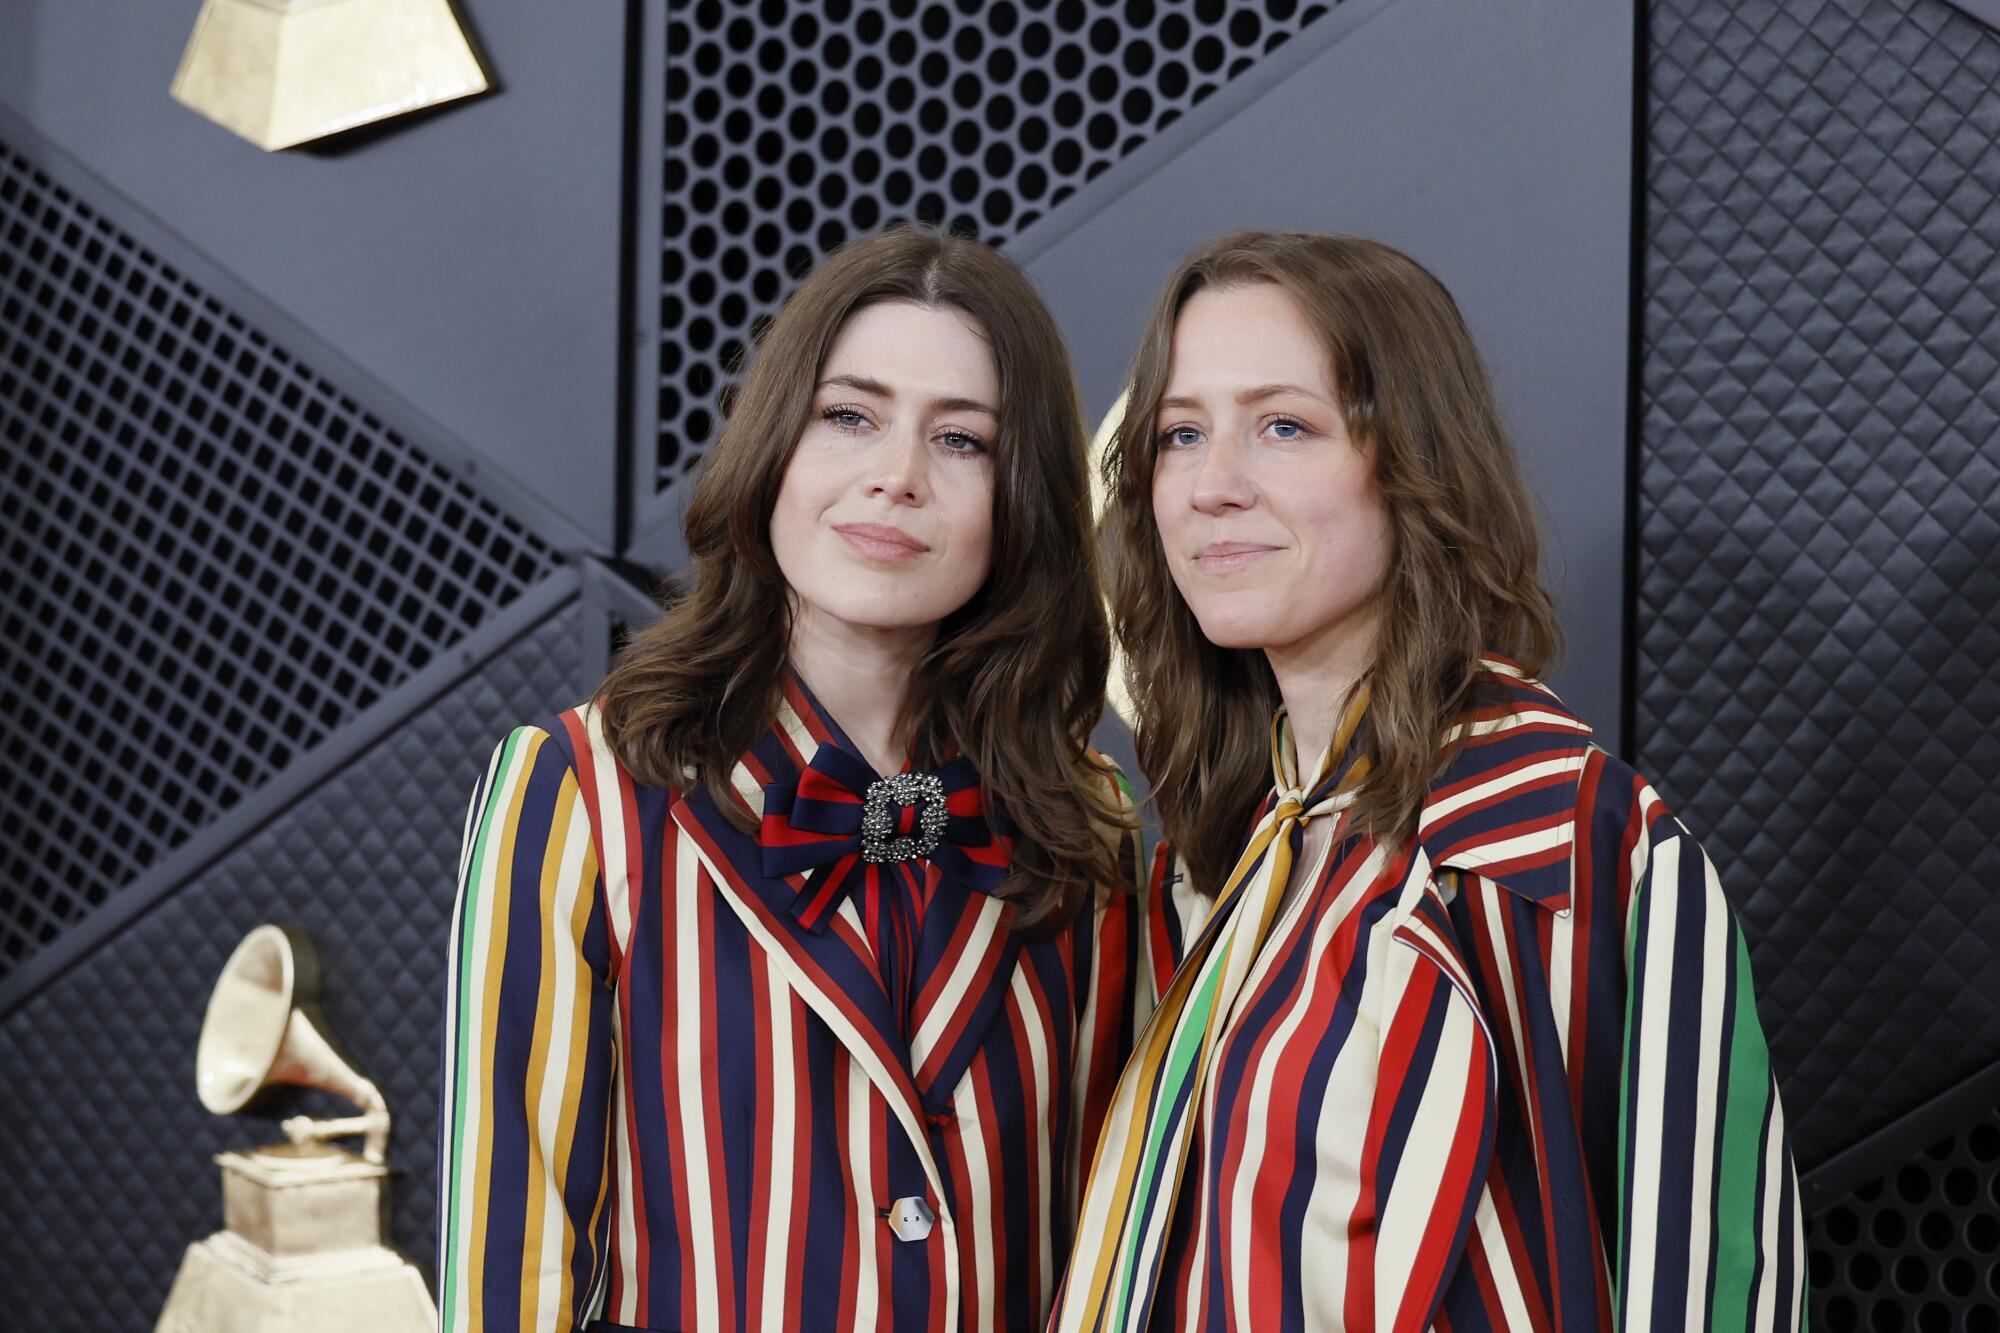 Rebecca and Megan Lovell of Larkin Poe wear striped suits 